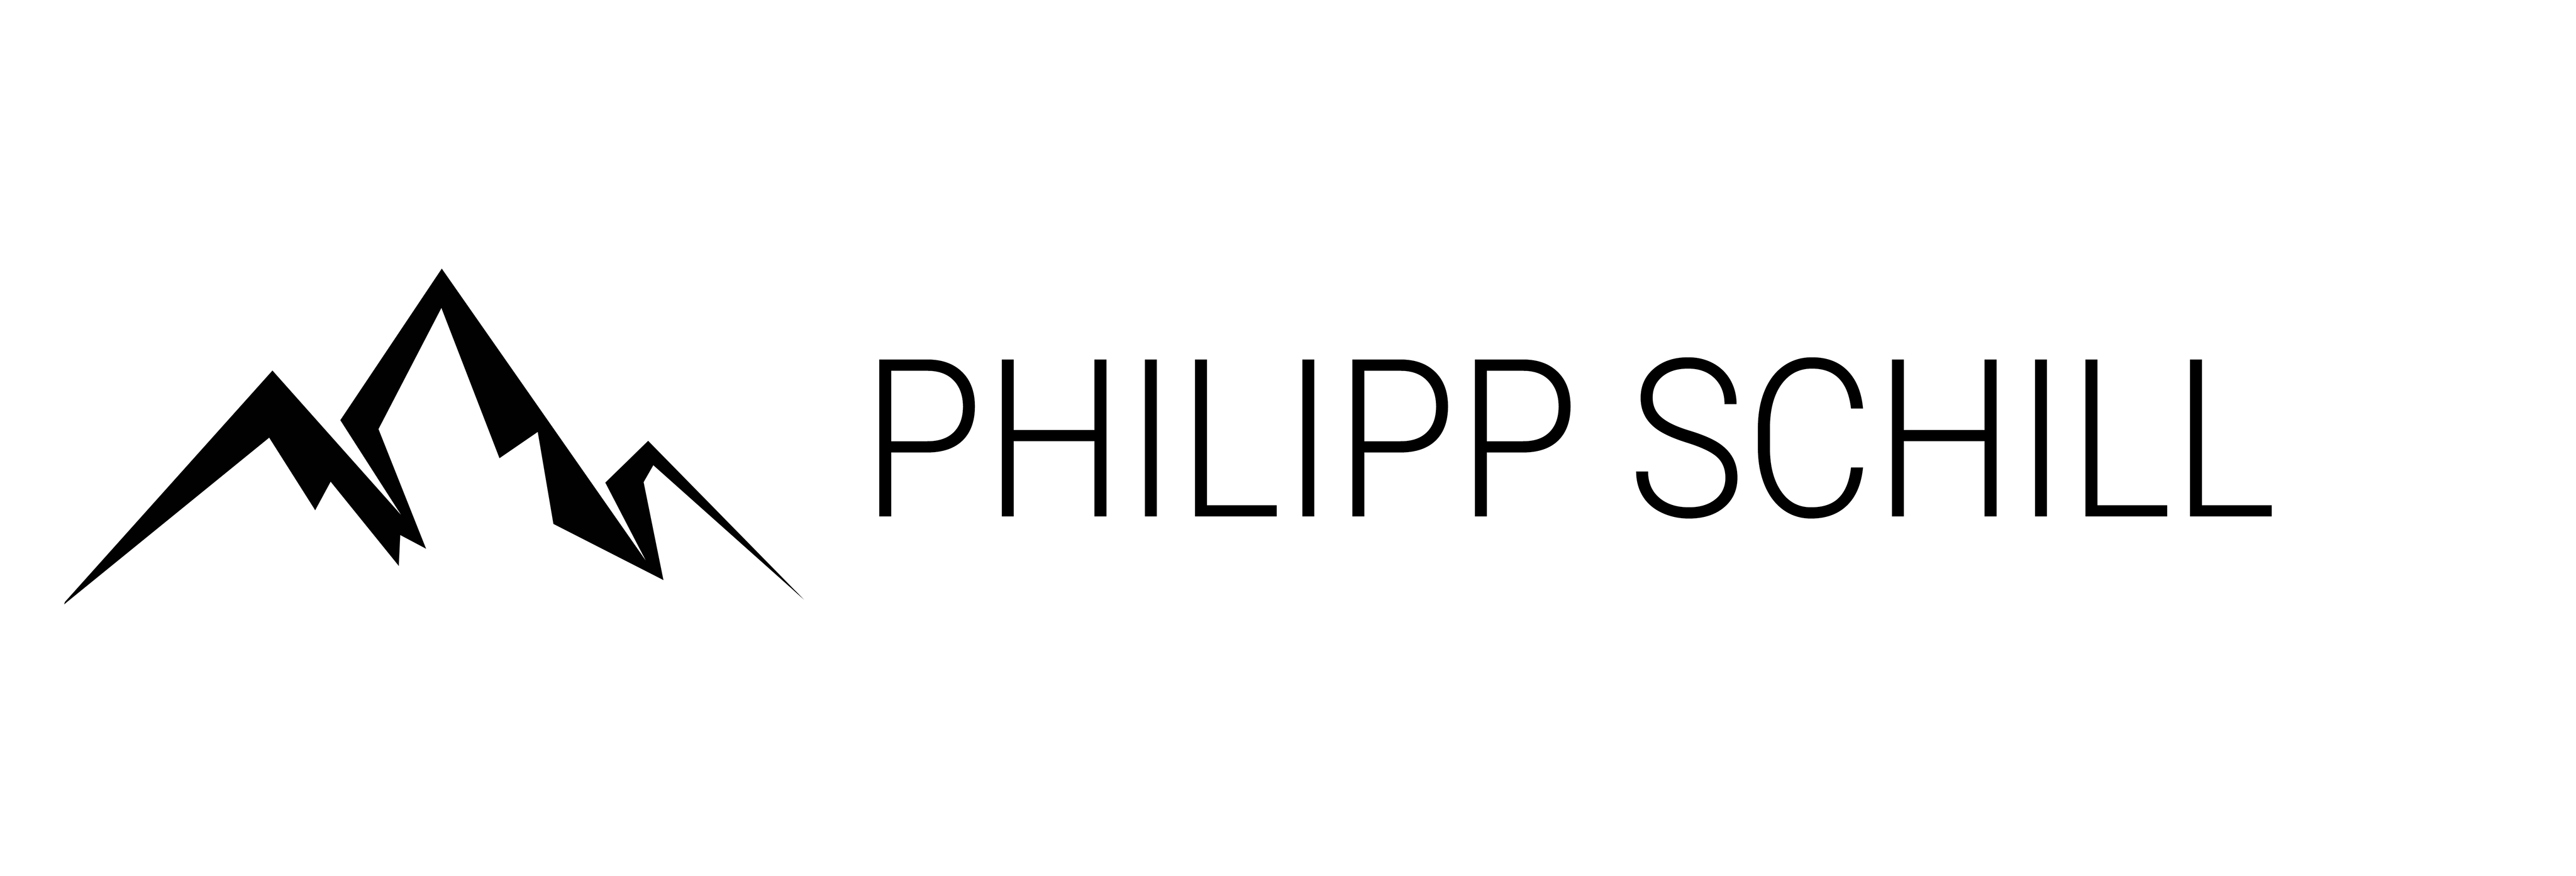 Philipp Schill